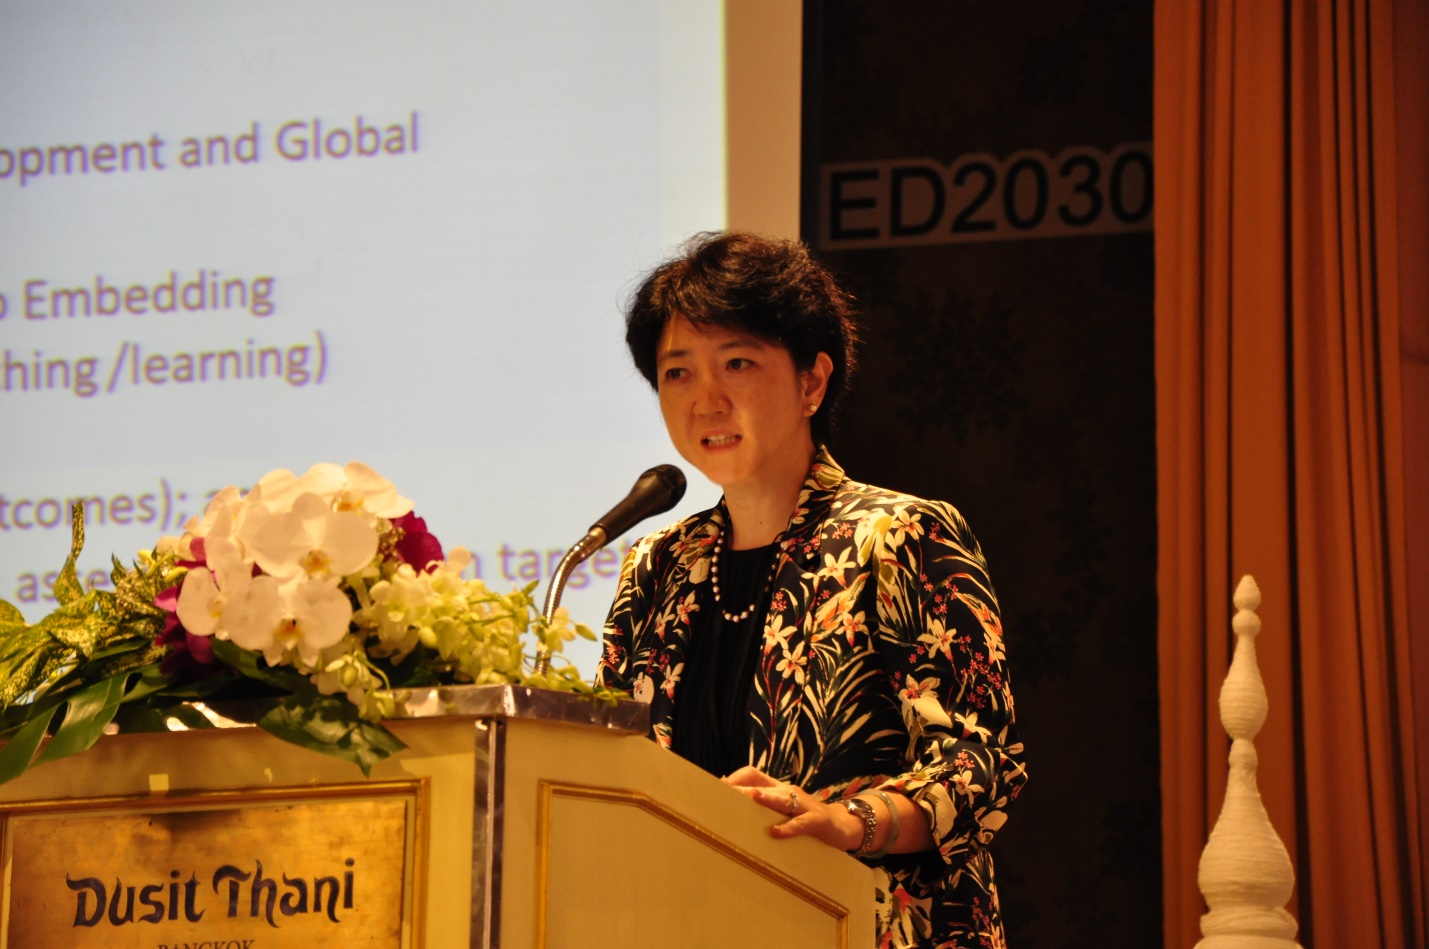 Maki Hayashikawa, Chief of UNESCO Bangkok’s Inclusive Quality Education (IQE) Section